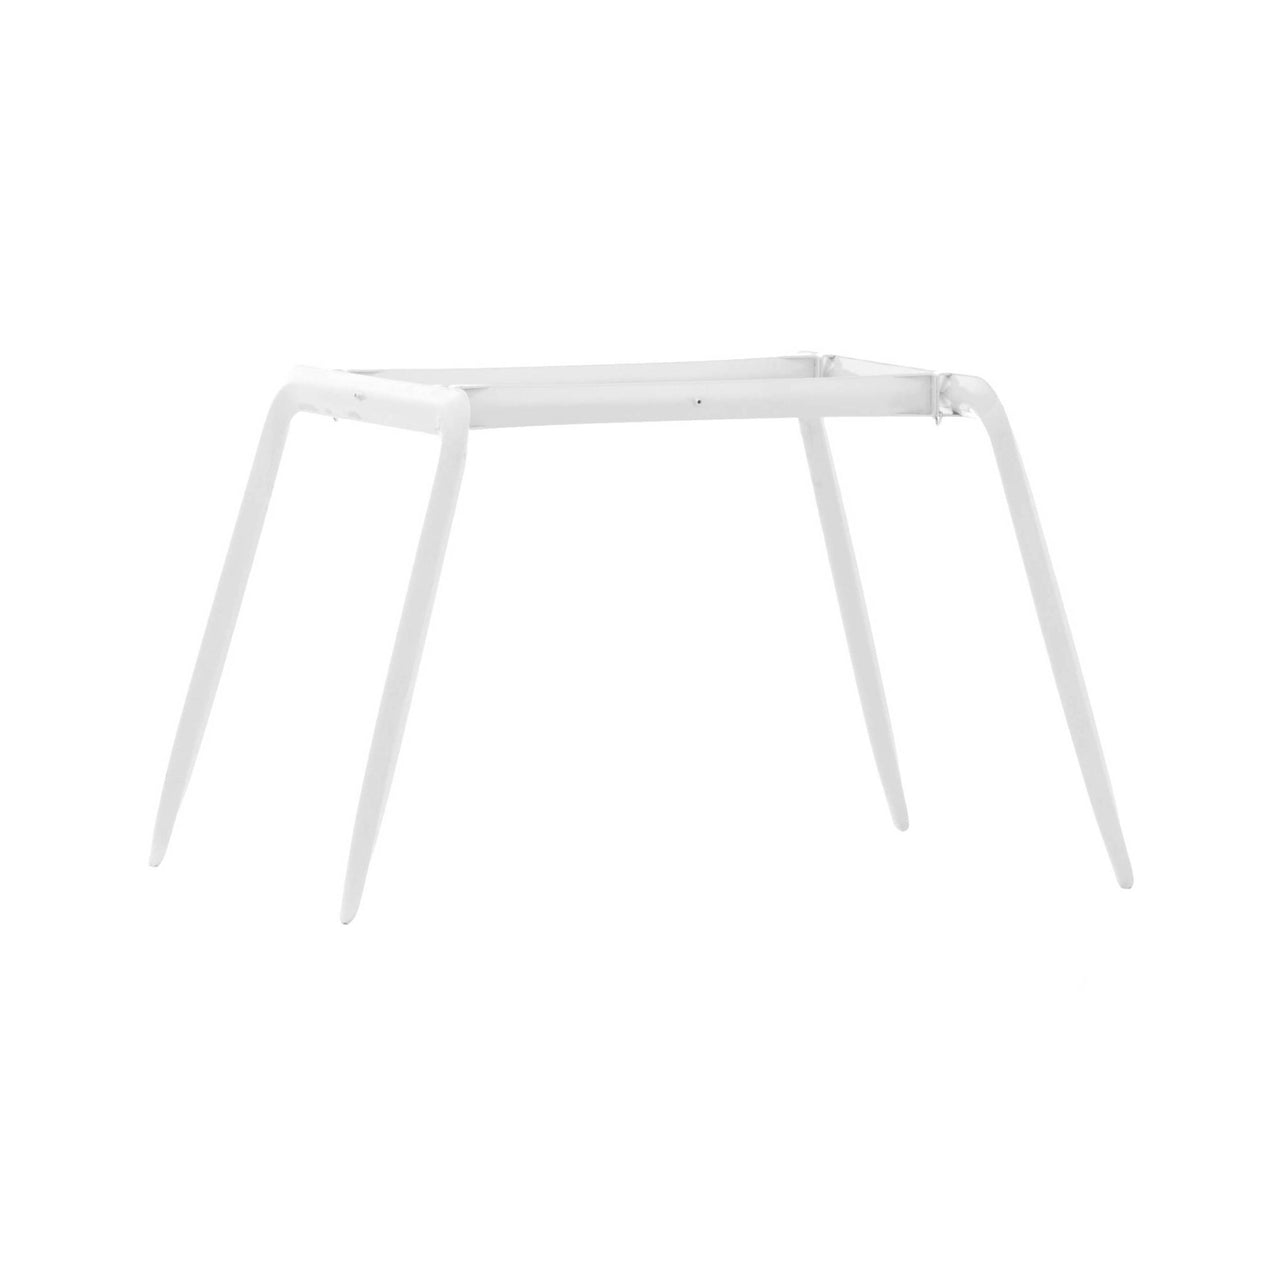 Koziol Table Frame: Glossy White Carbon Steel